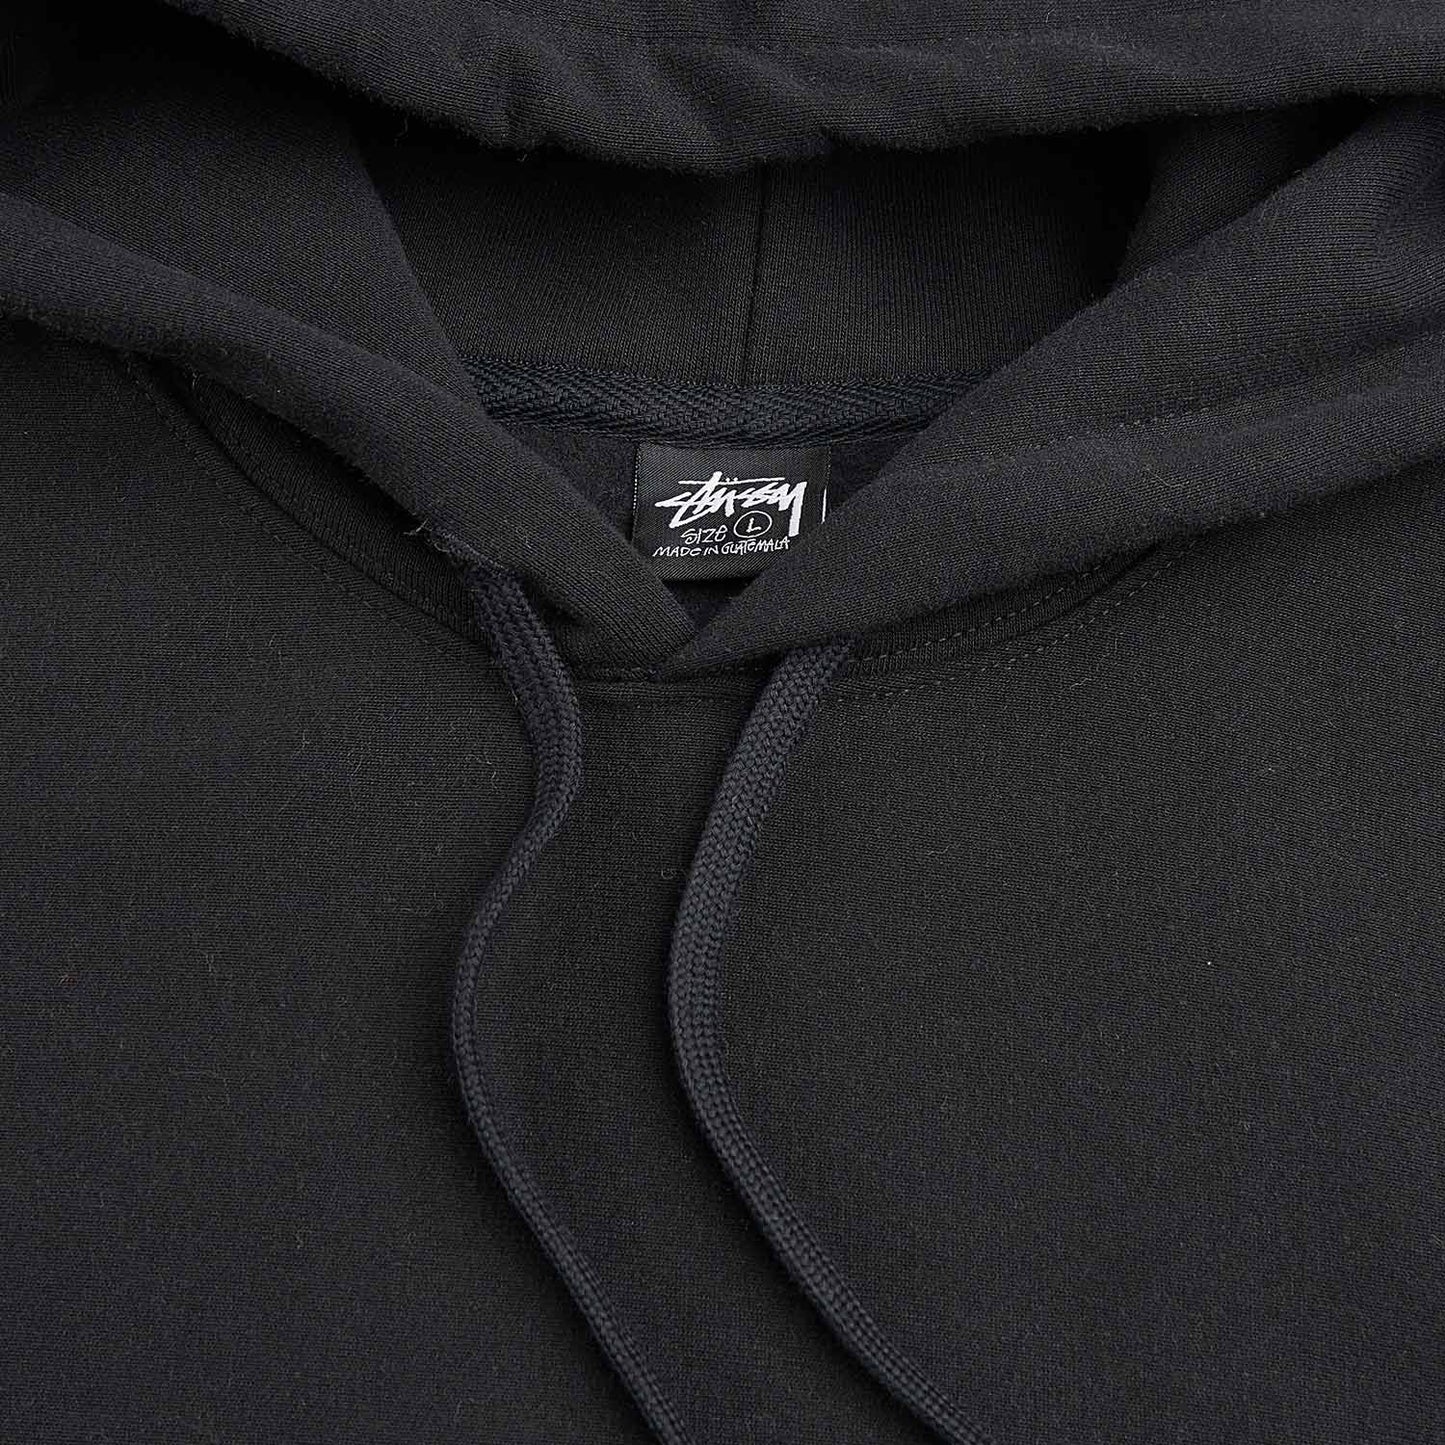 stüssy back hood applique hoodie (schwarz)